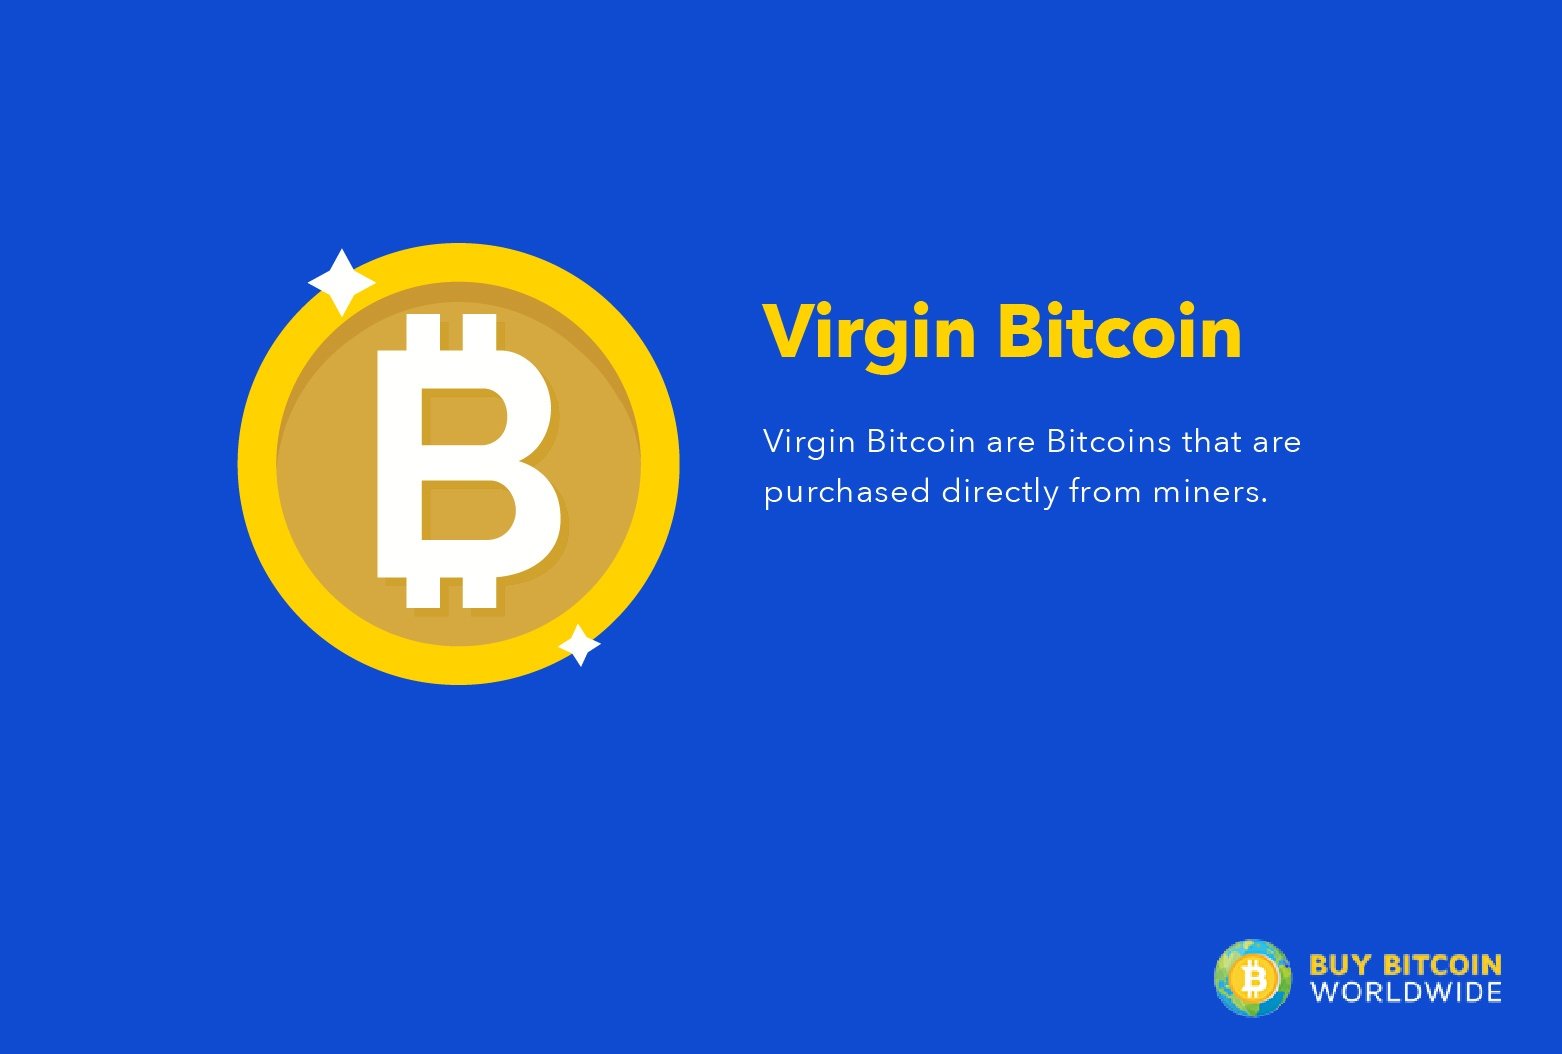 Virgin Bitcoin